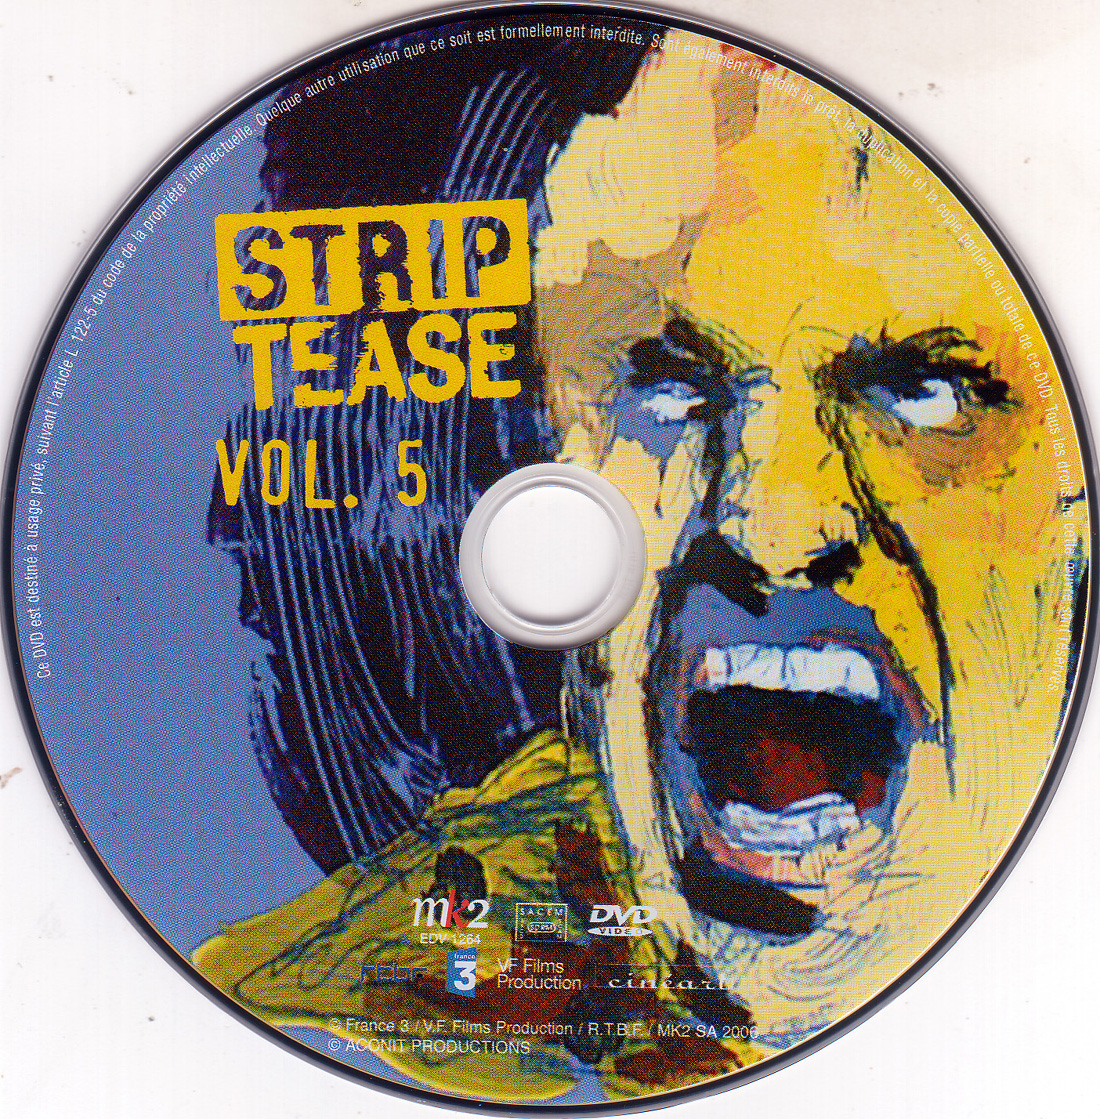 Strip tease vol 05